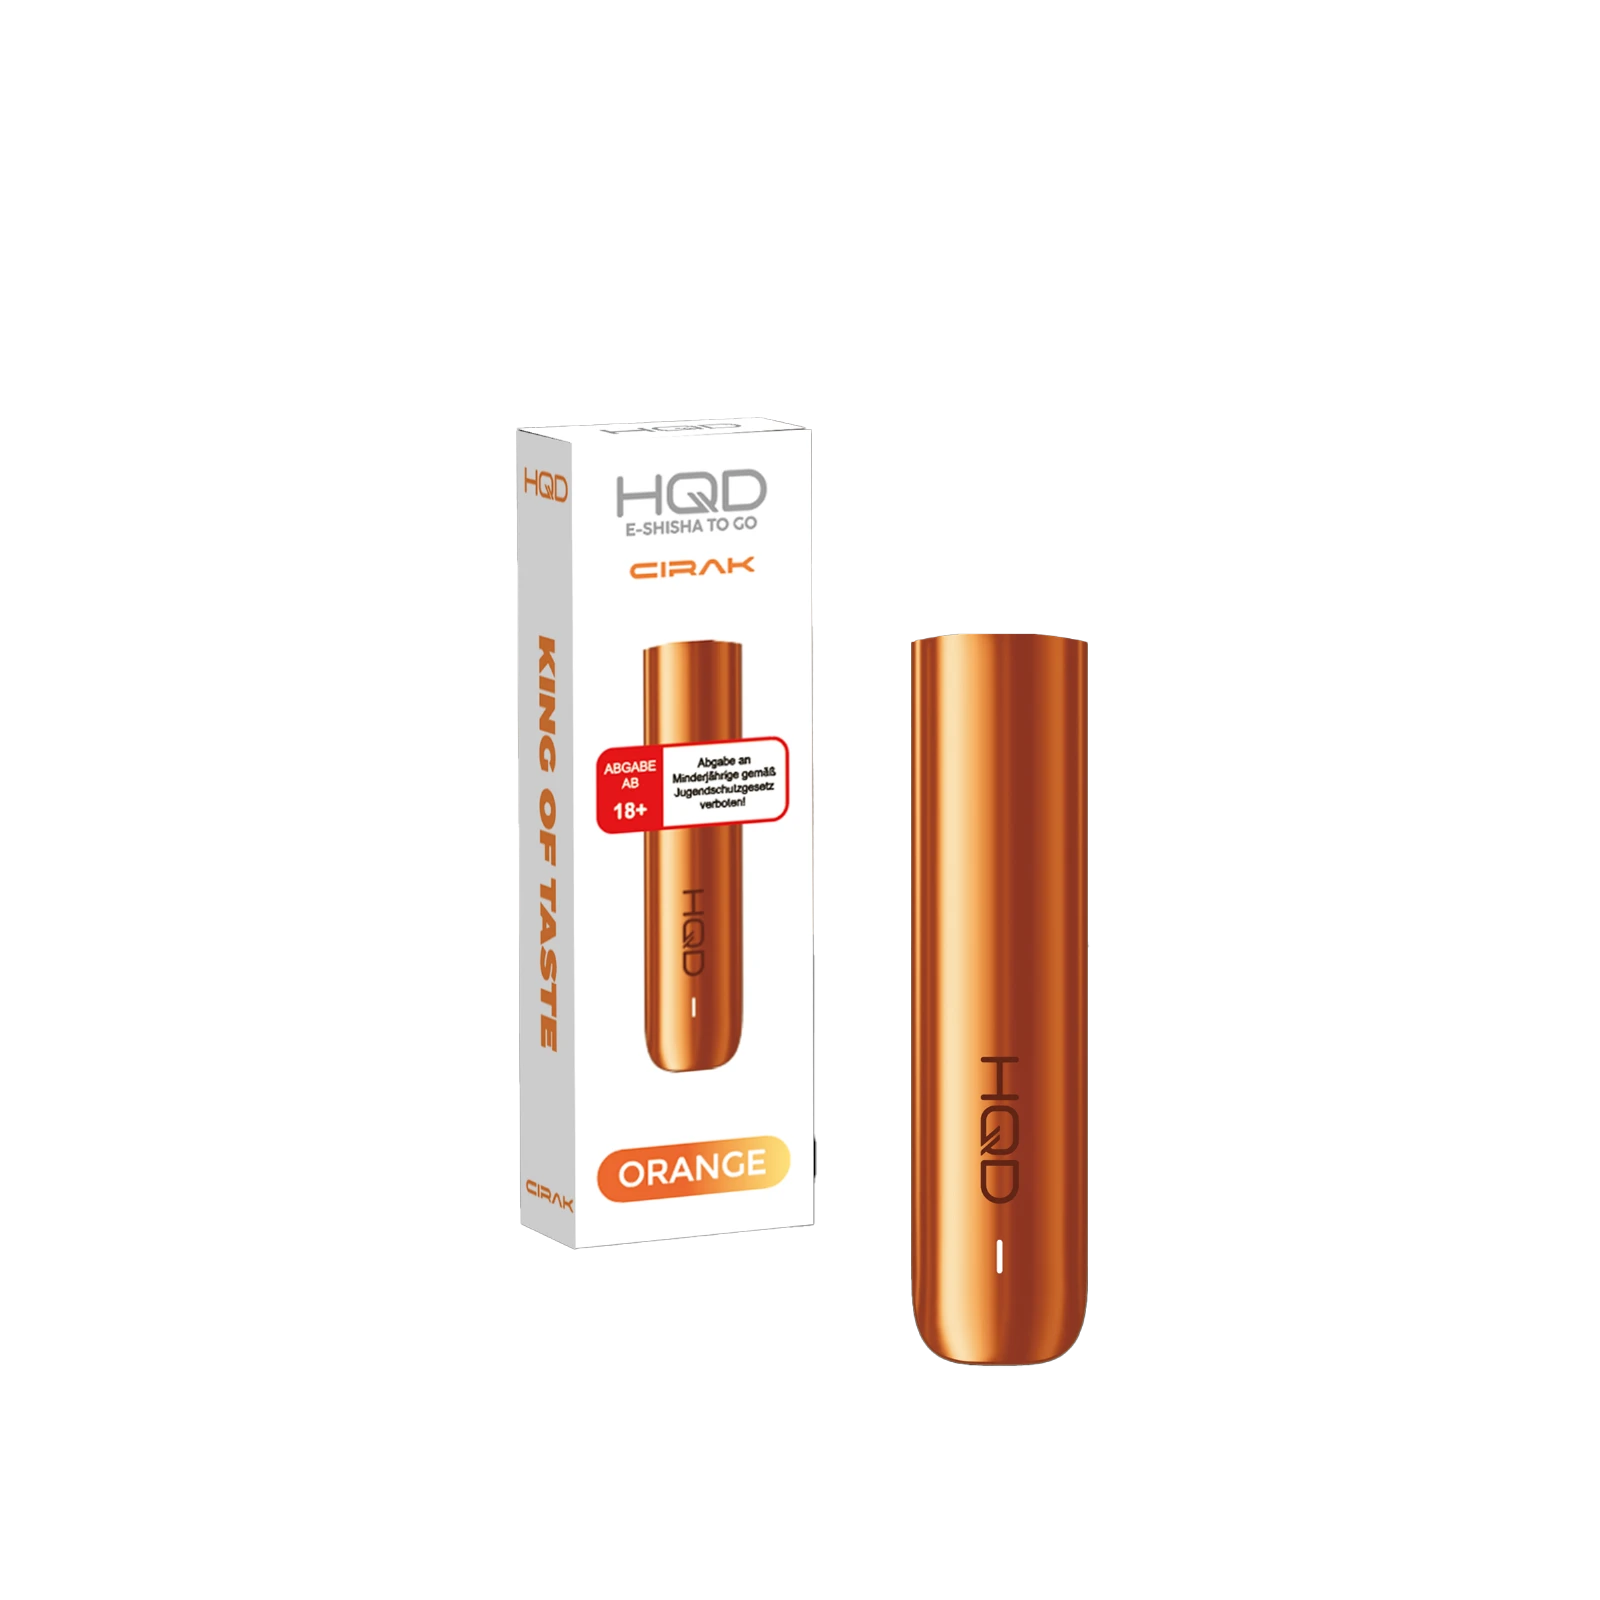 HQD - Cirak - Basisgerät - Orange | Prefilled Pod System günstig kaufen1